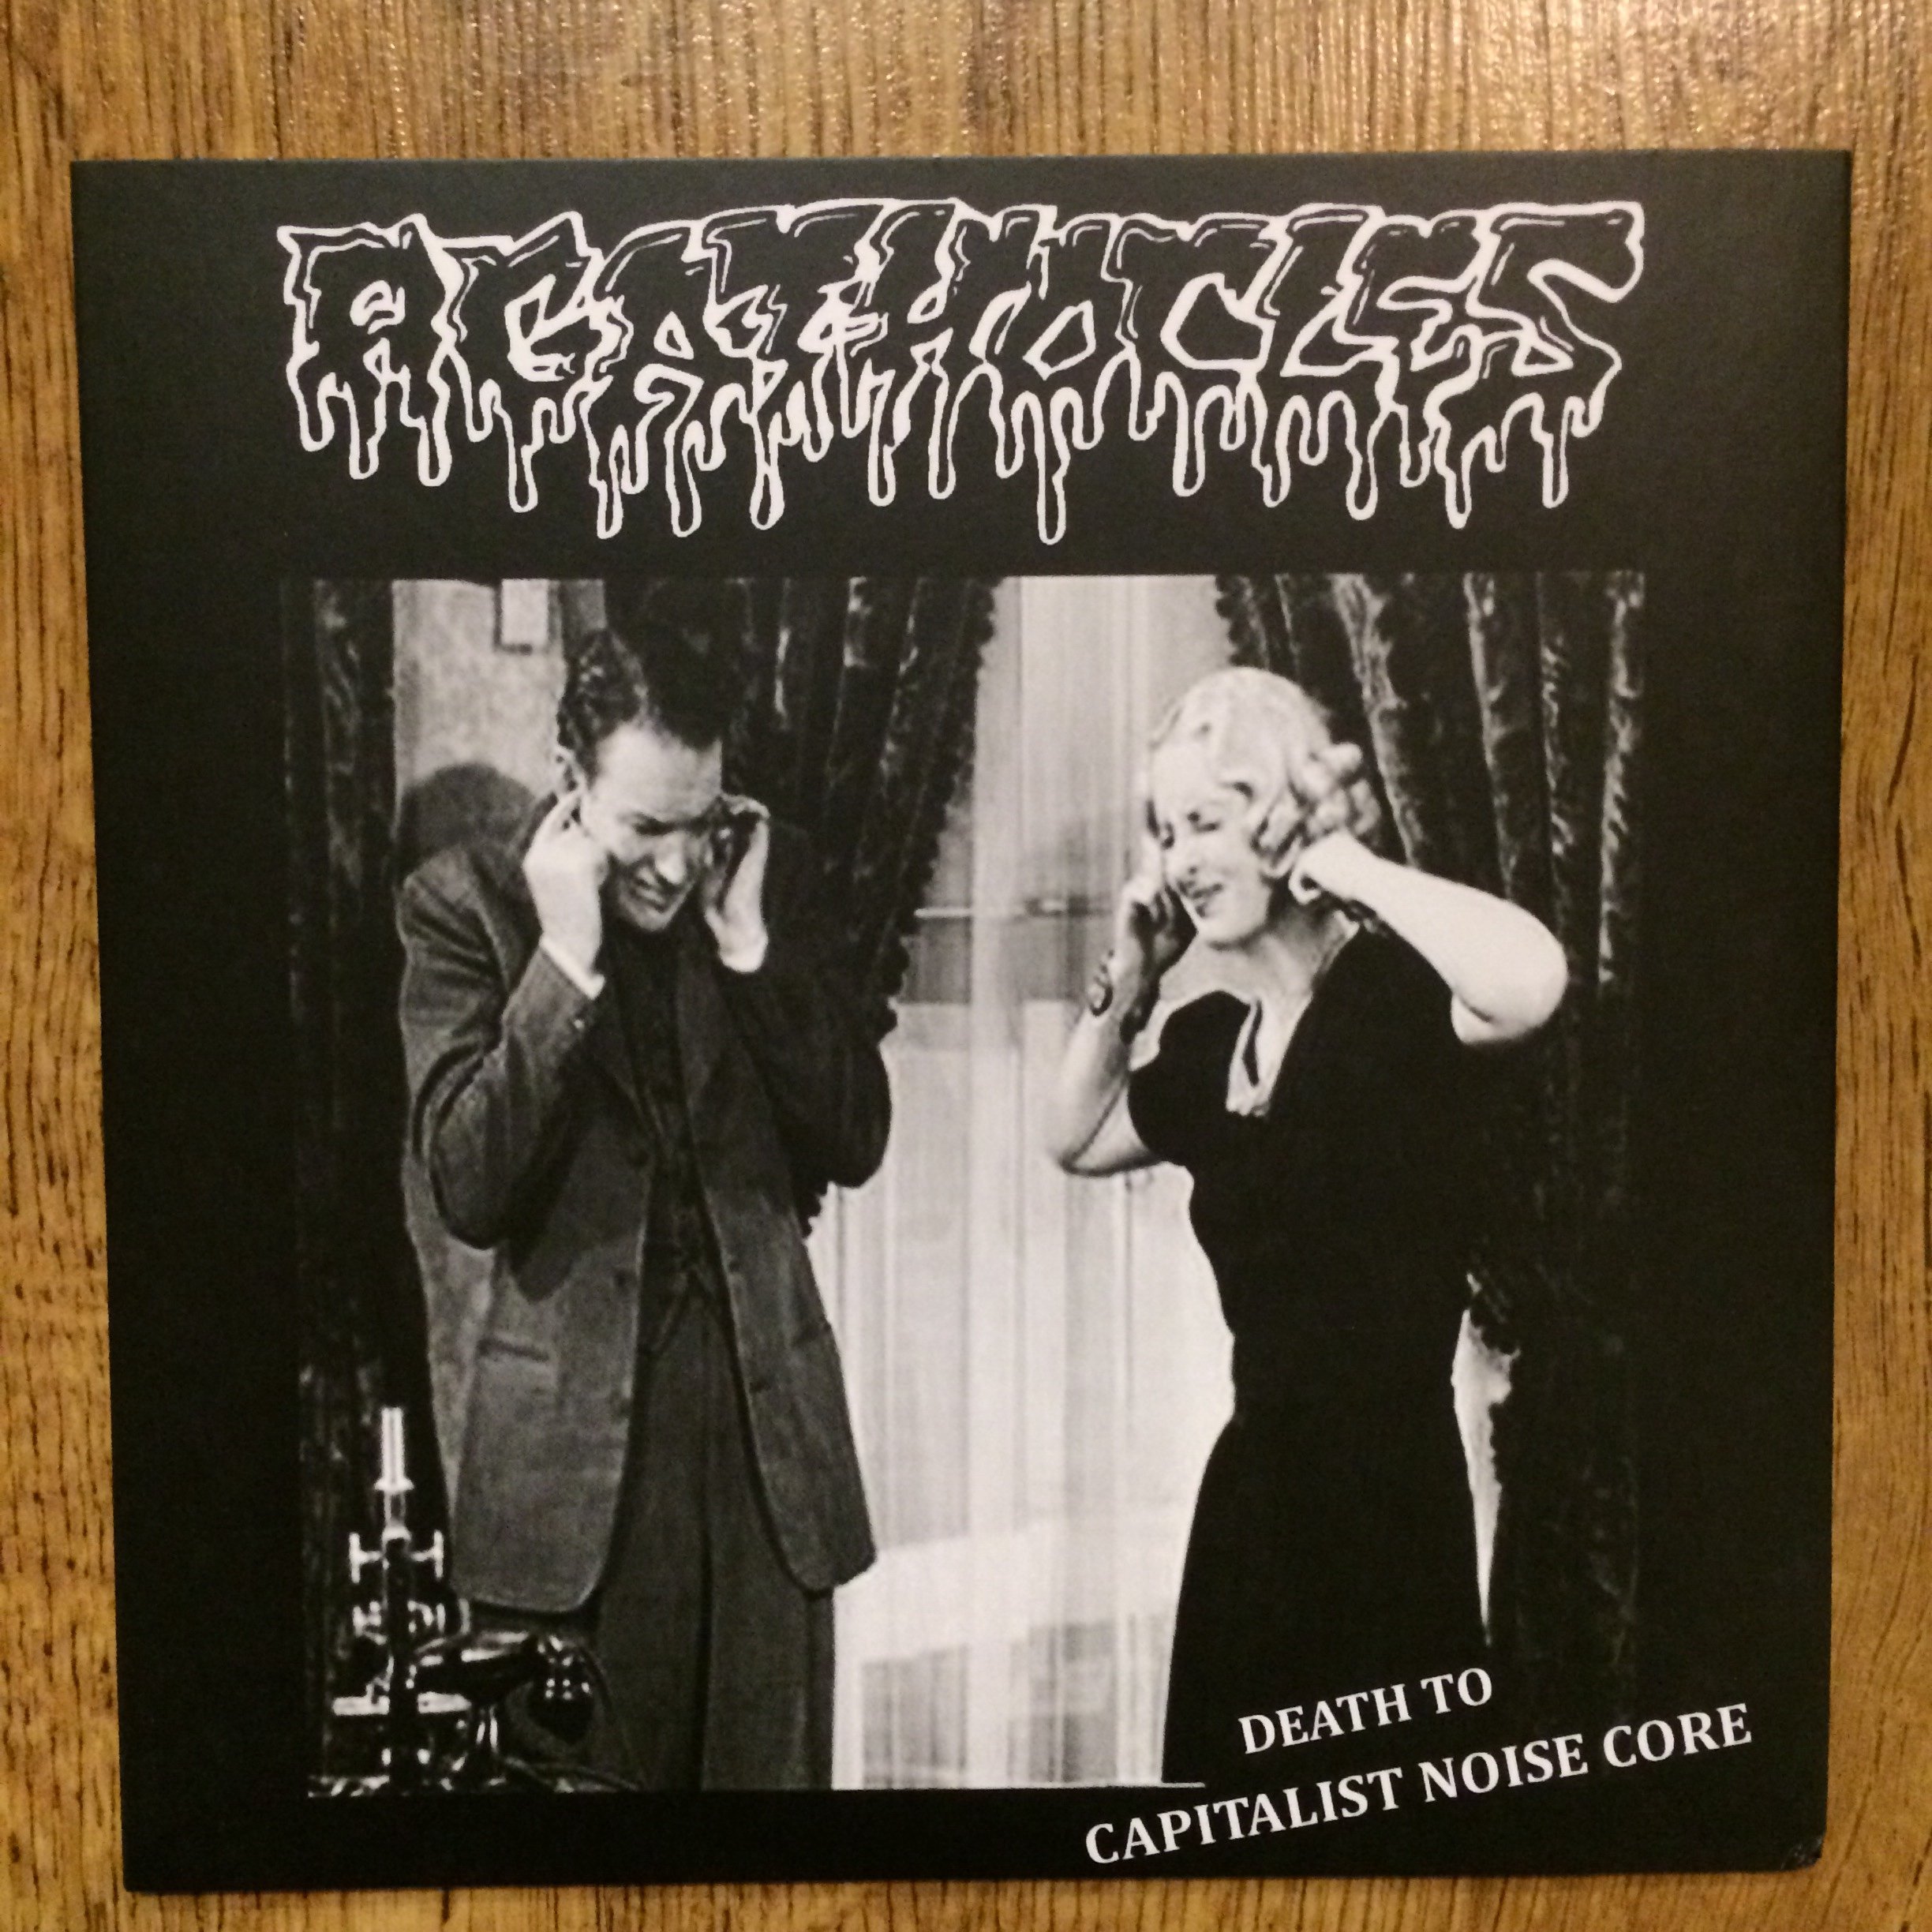 Photo of the Agathocles - "Death to Capitalist Noisecore" EP (Black vinyl)